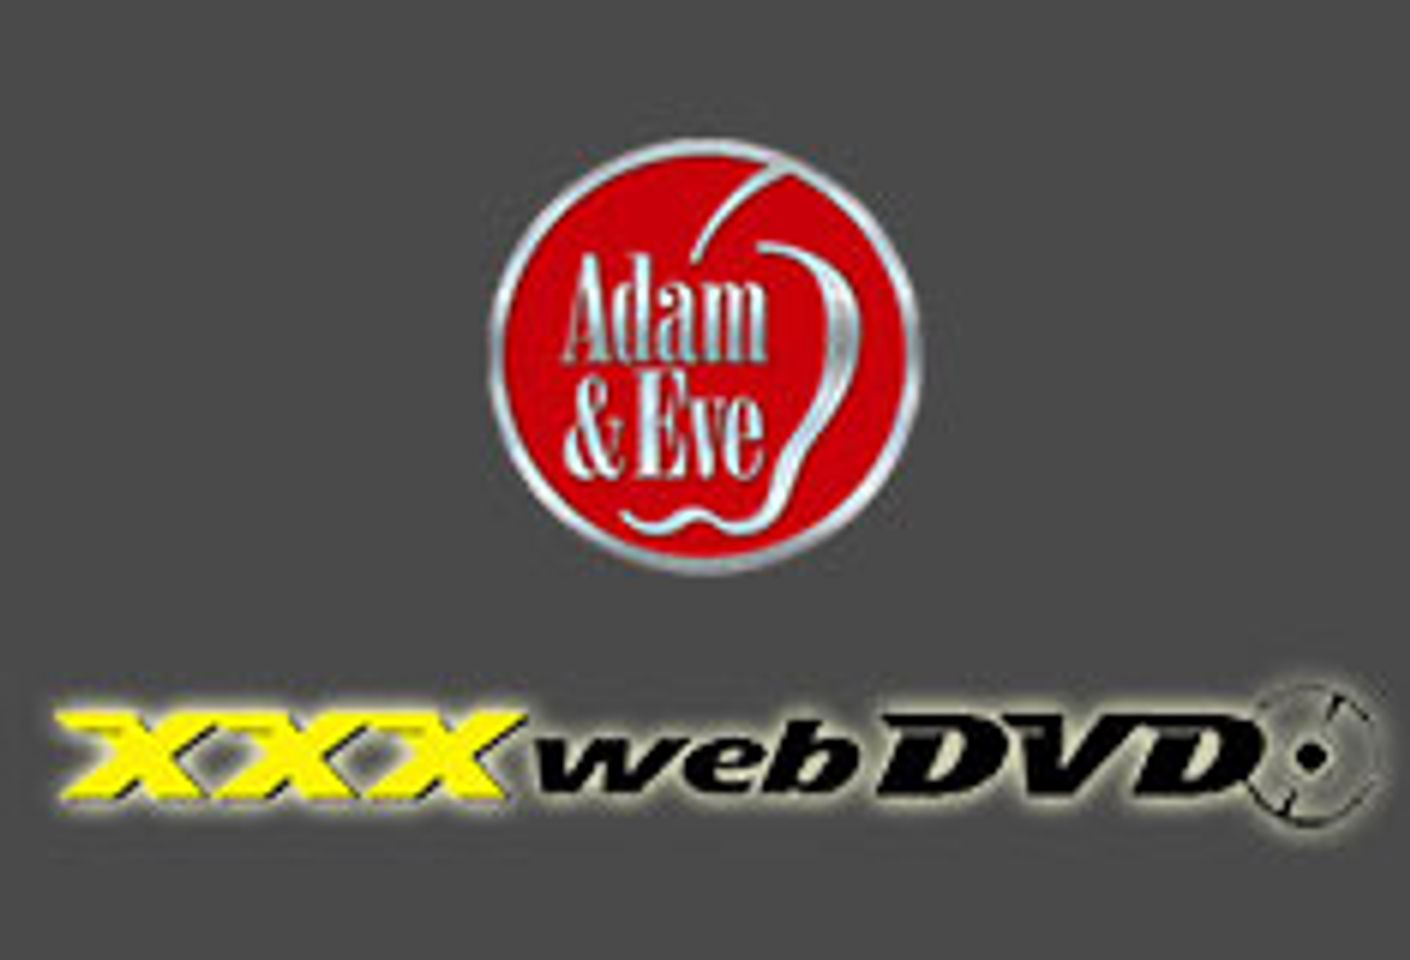 Adam & Eve Launches New XXX Web DVD Line